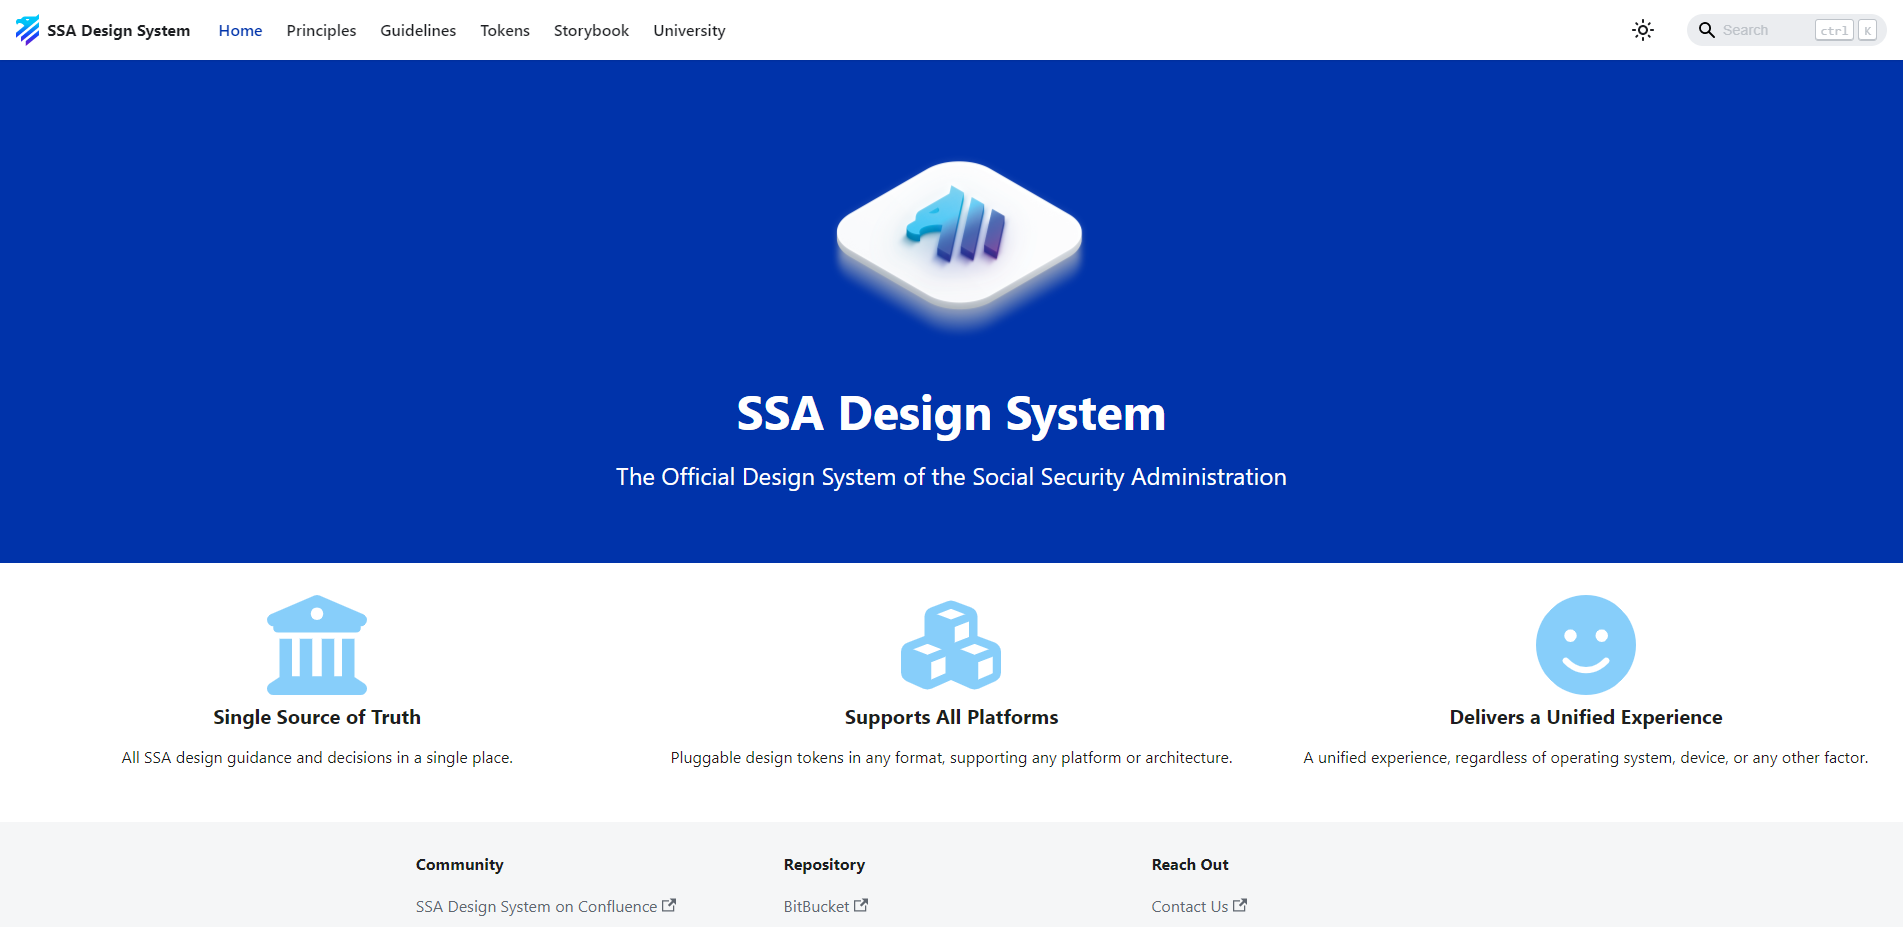 SSA Design System